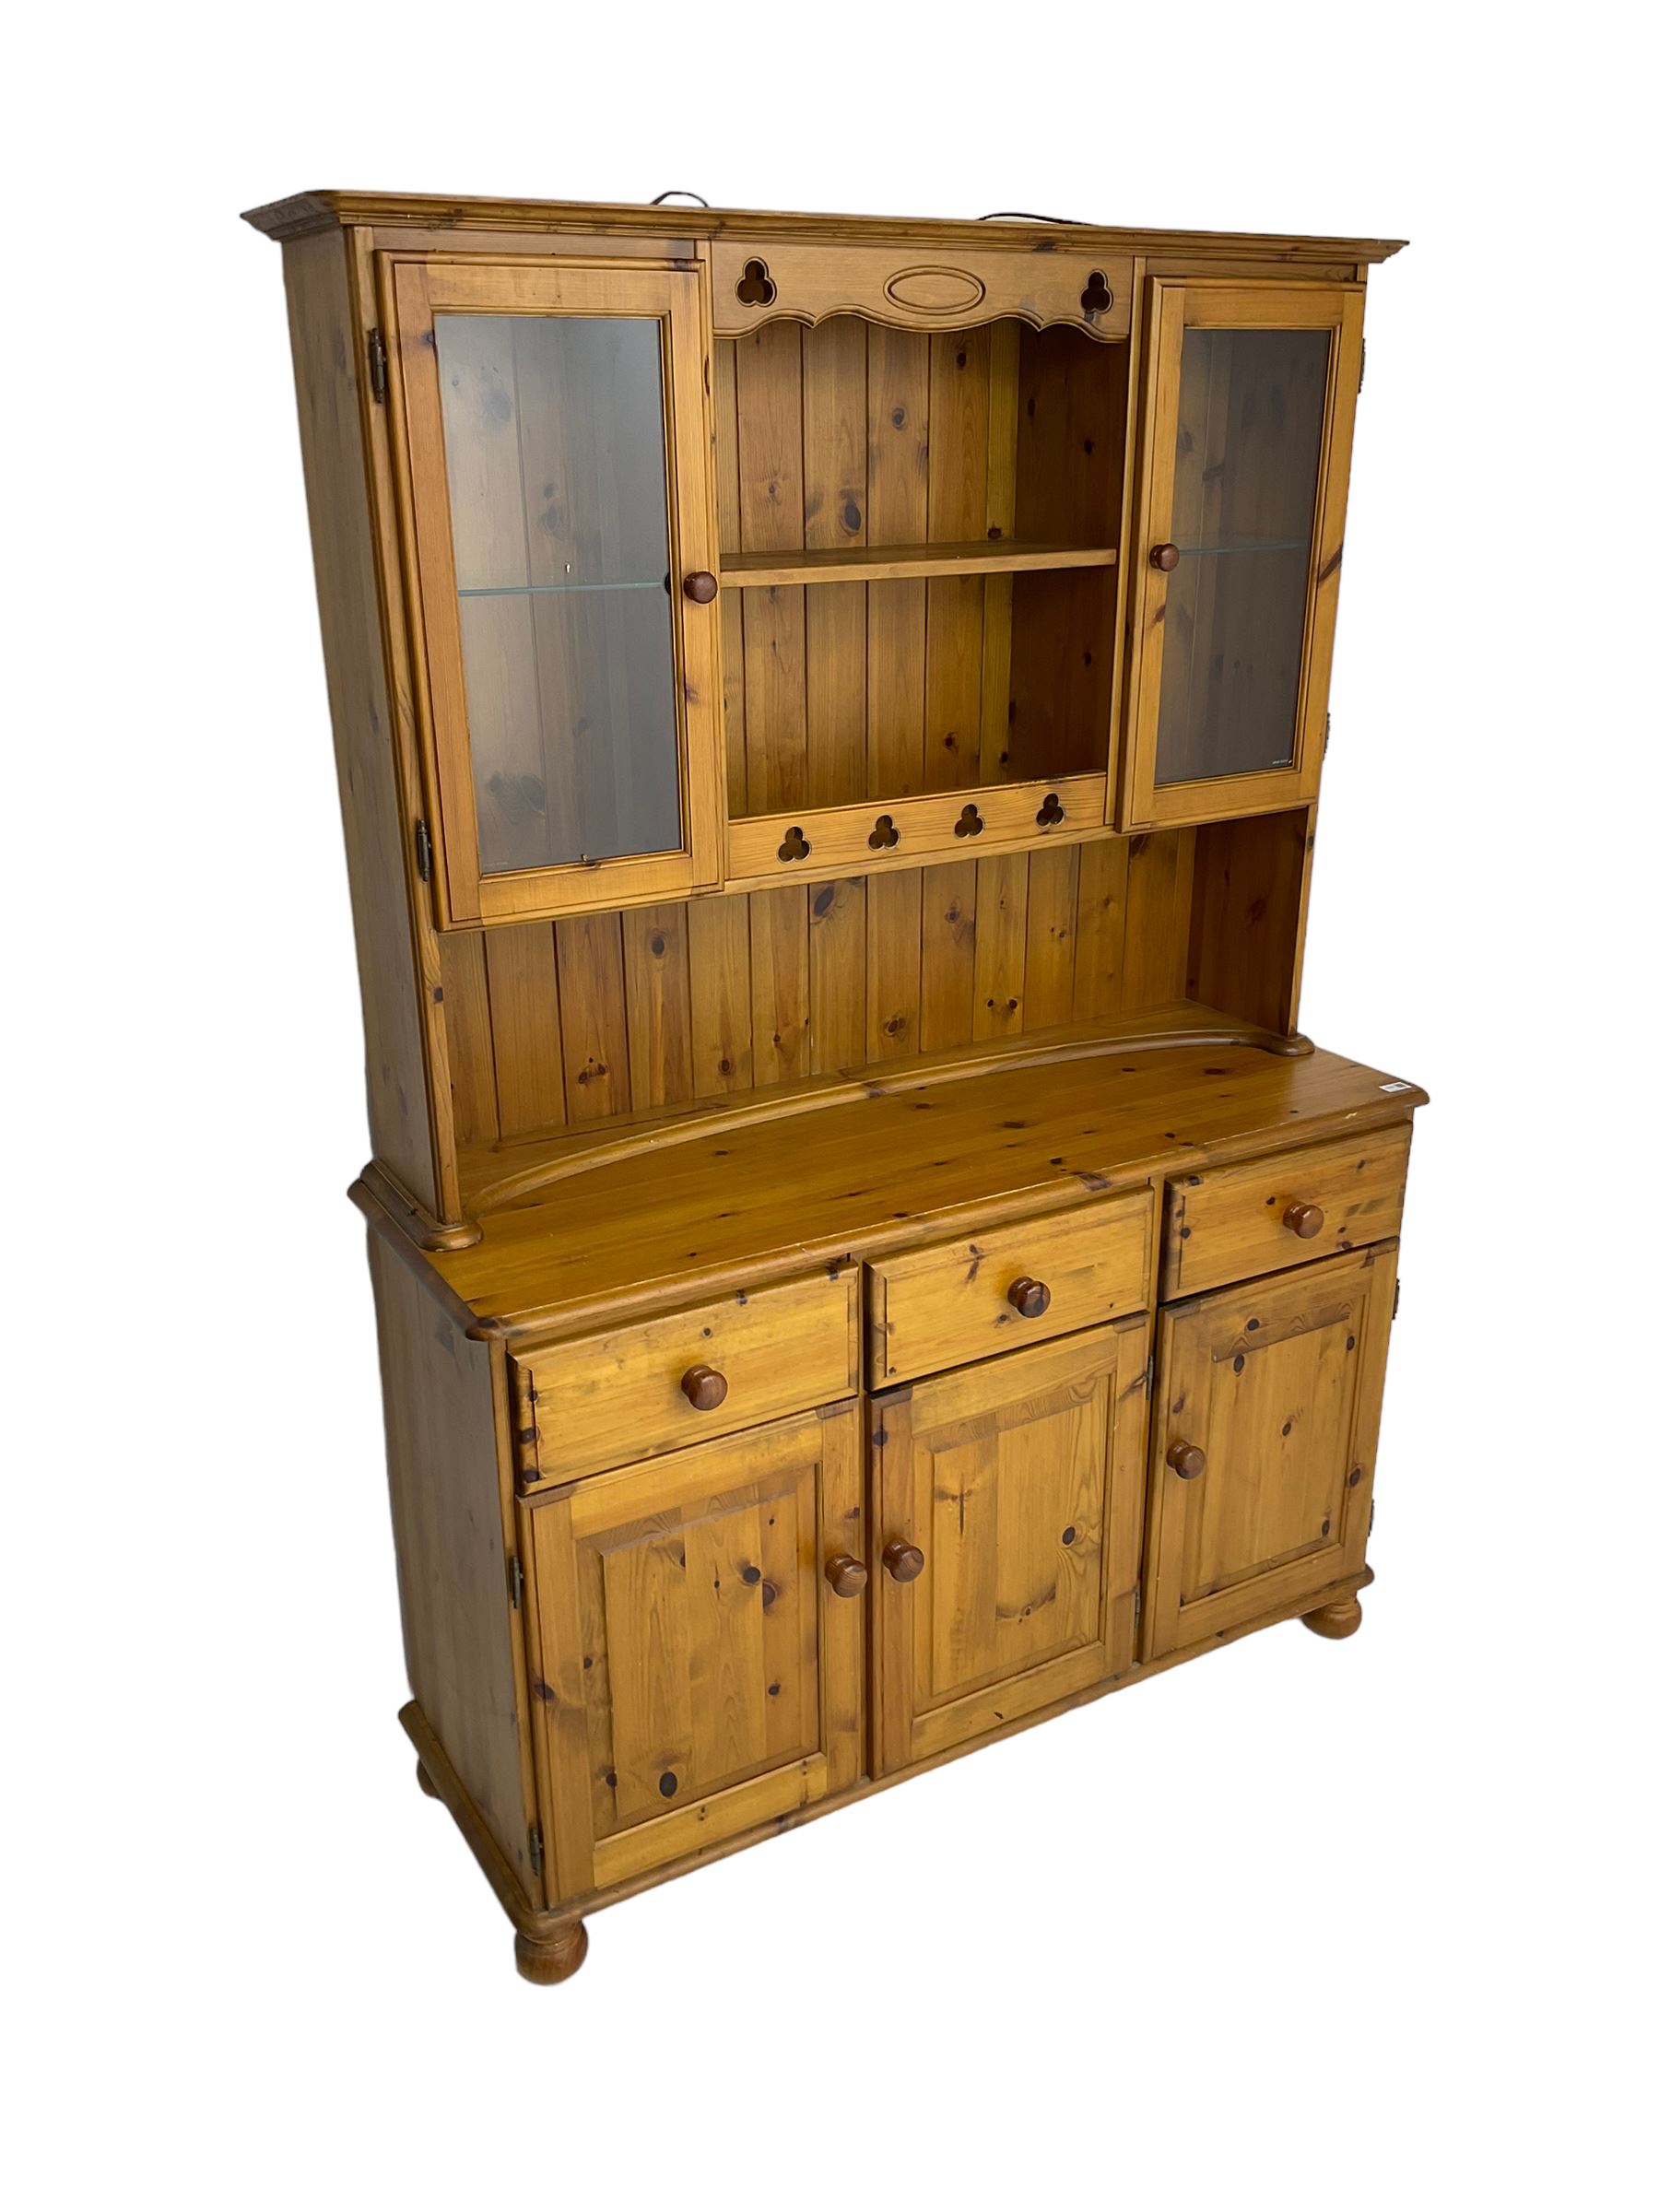 Traditional pine kitchen dresser - Image 4 of 6